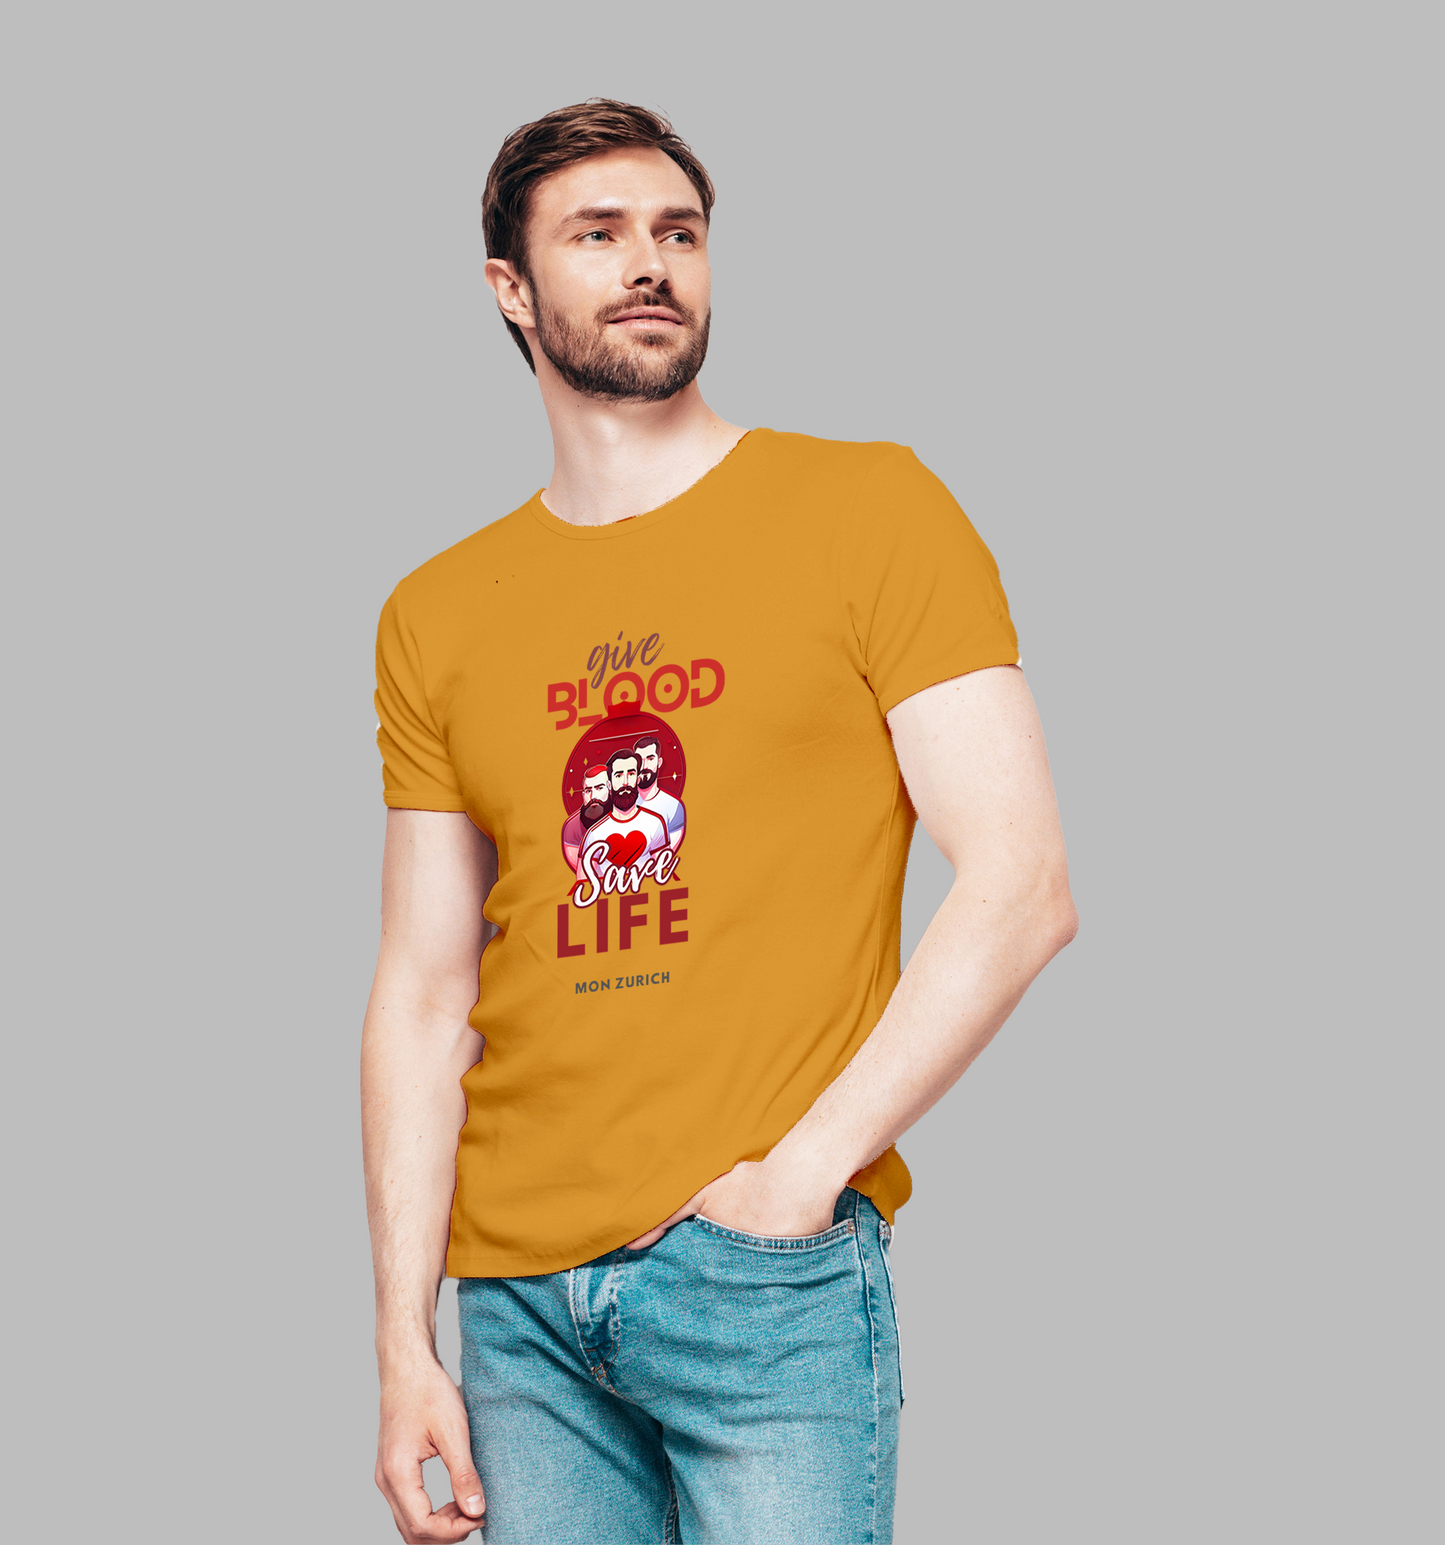 Give Blood Save Life T-Shirt In Light - Mon Zurich Originals